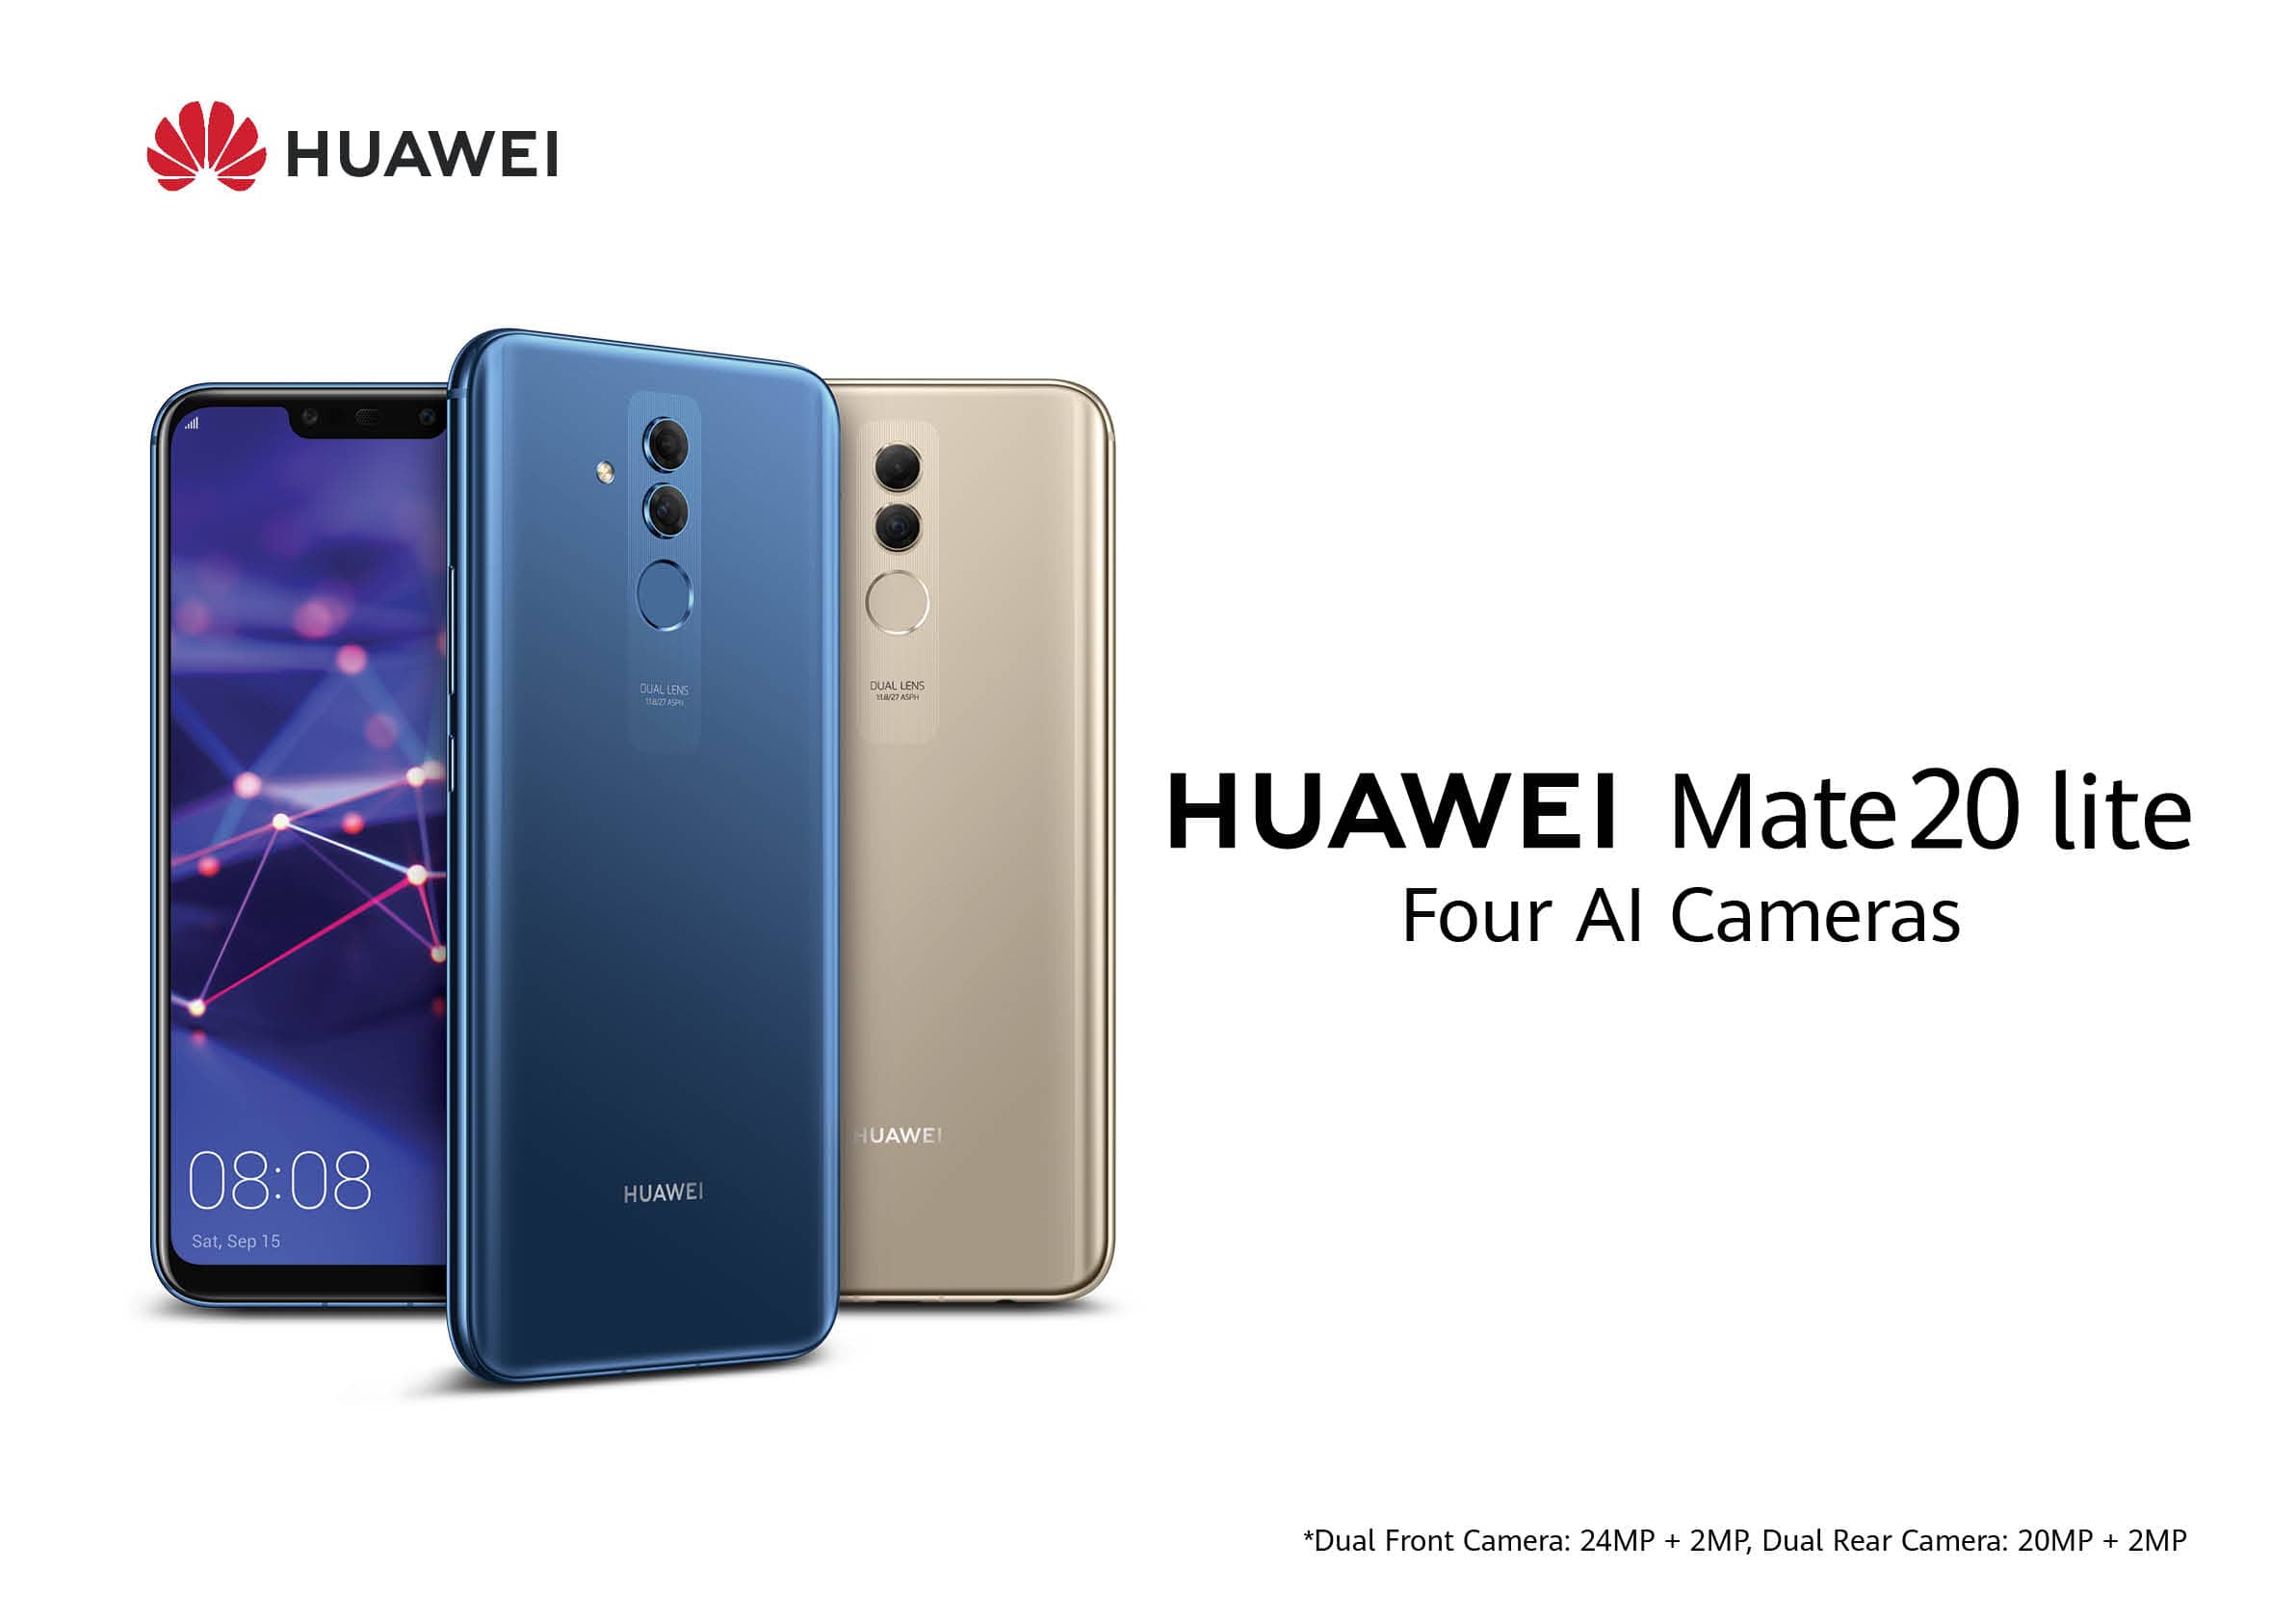 Хуавей 20 lite. Huawei Mate 20 Lite. Хуавей Mate 20. Huawei Zen Mate 20 Lite. Huawei Mate 20 Lite EMUI 8.1.